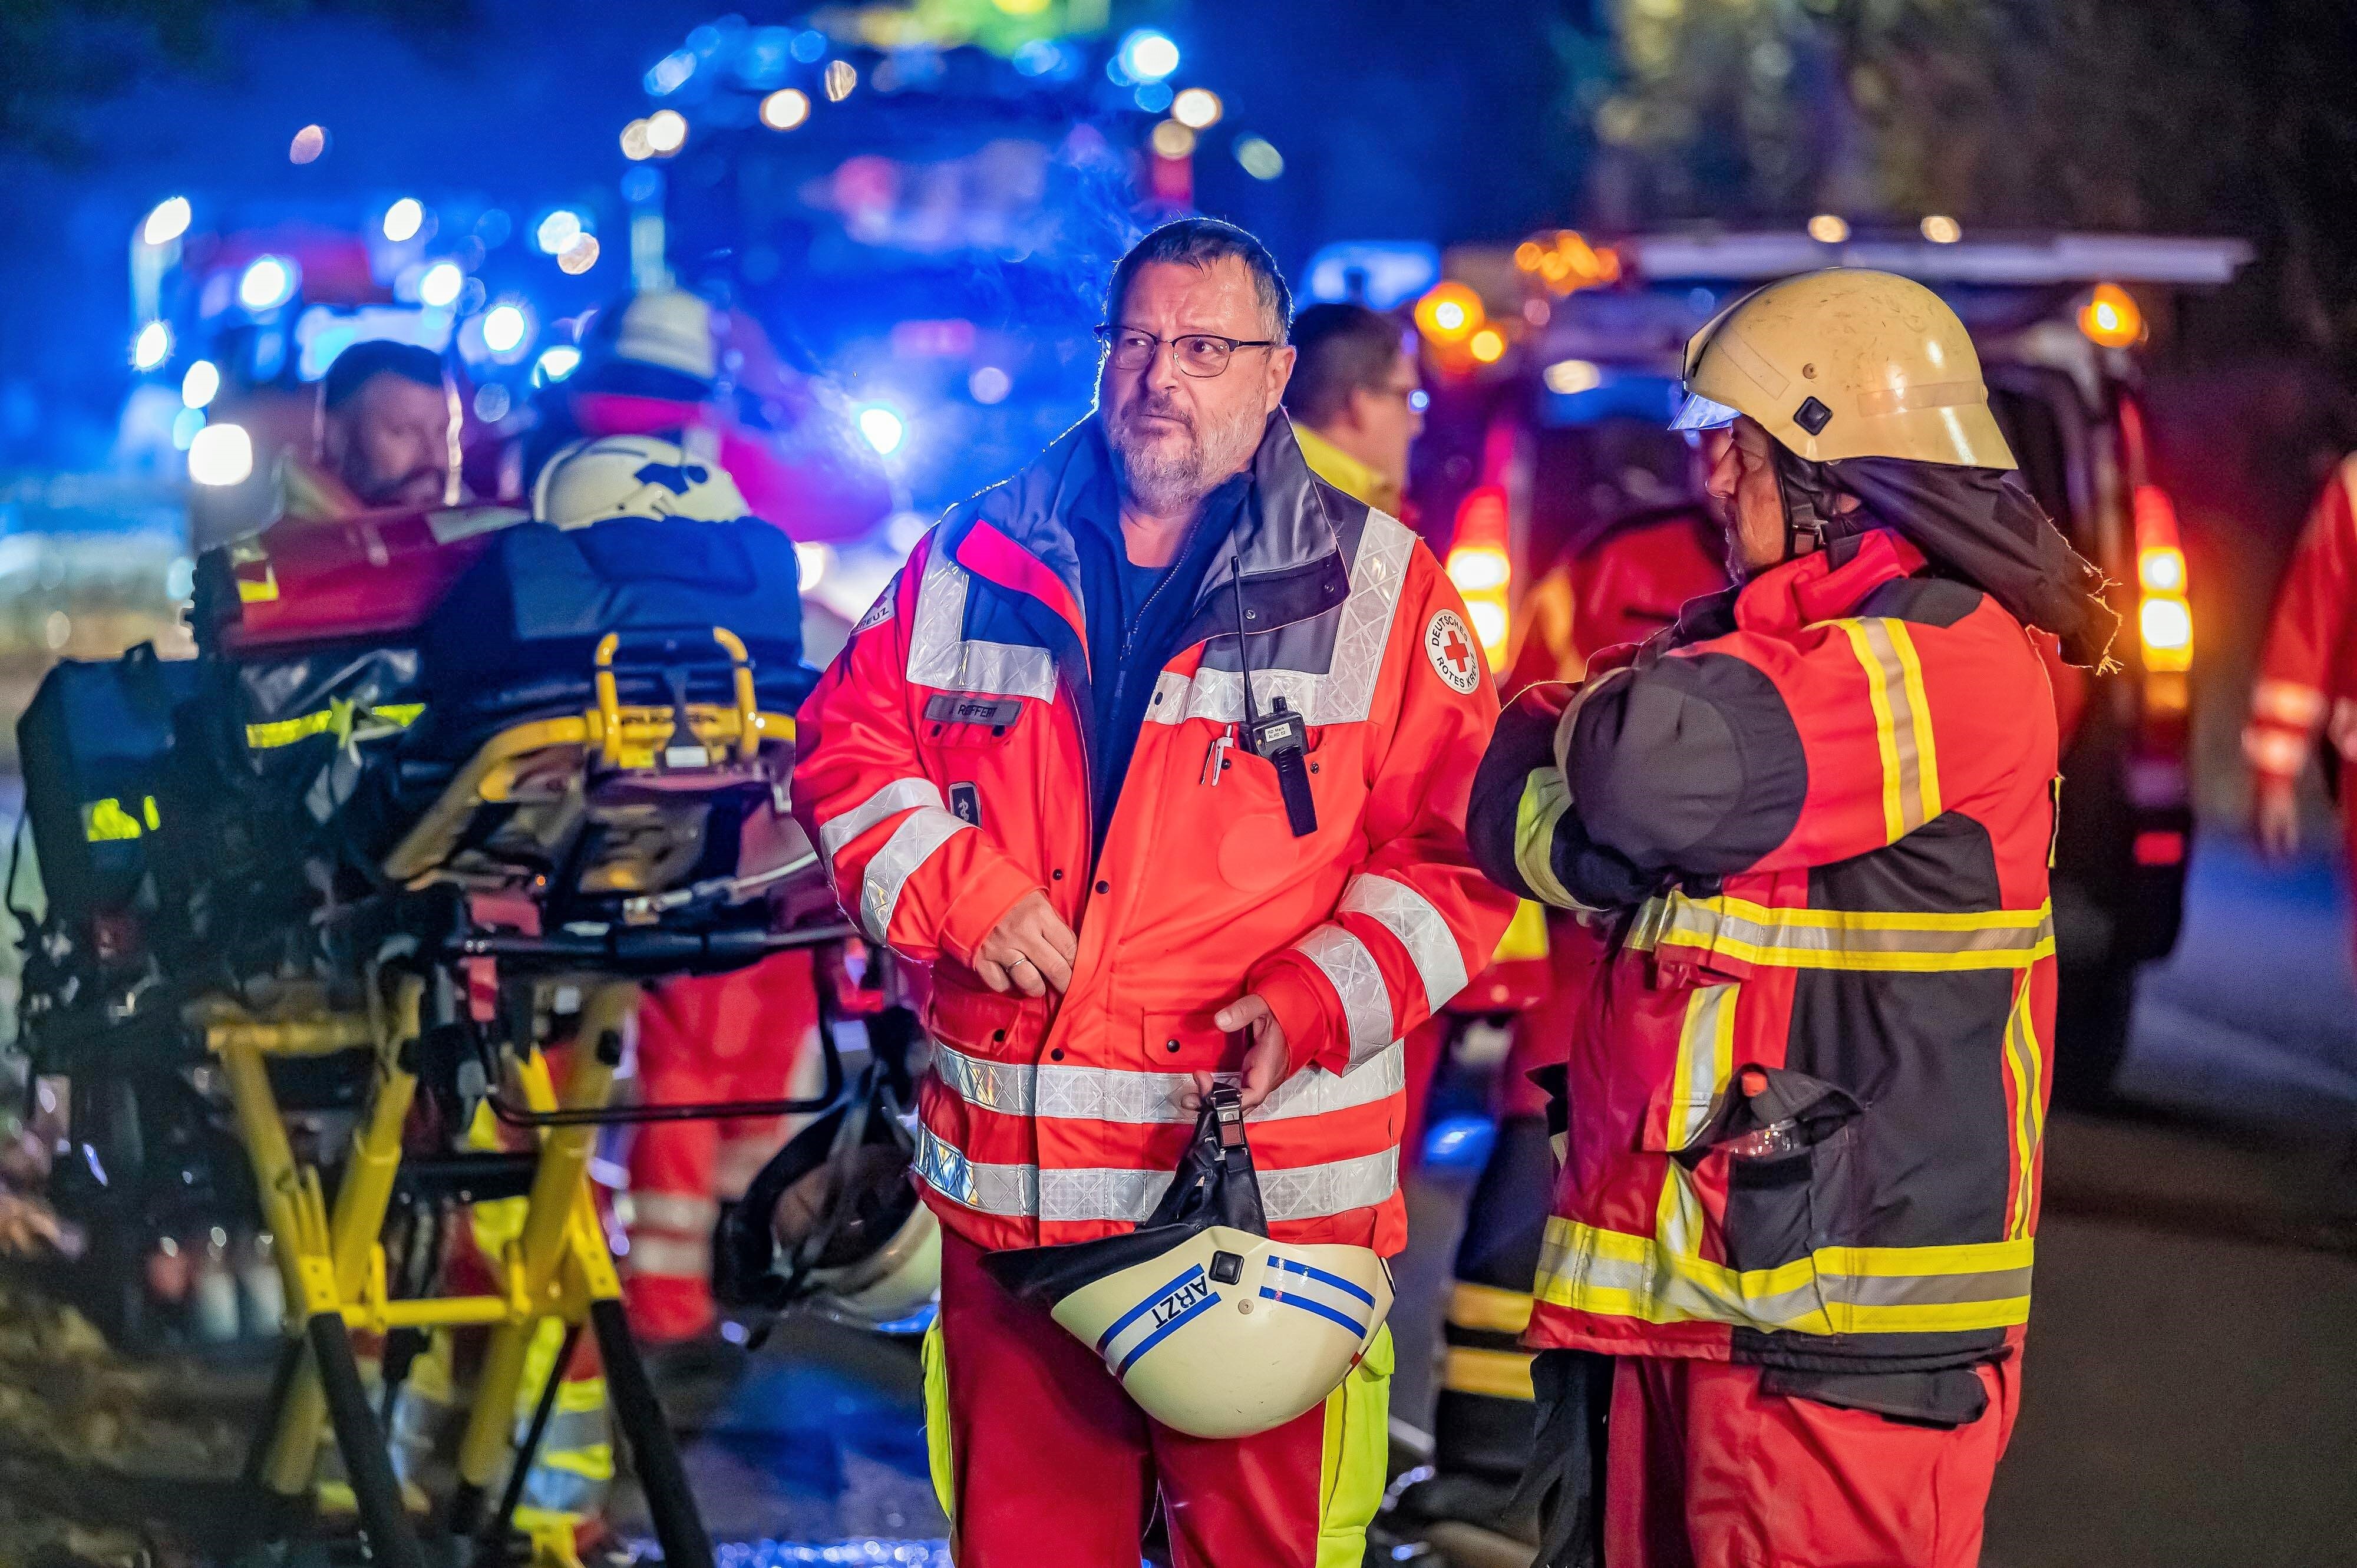 Brandstiftung! Feuer in Hamburger Krankenhaus - Polizei jagt Feuerteufel, Patienten in Angst!